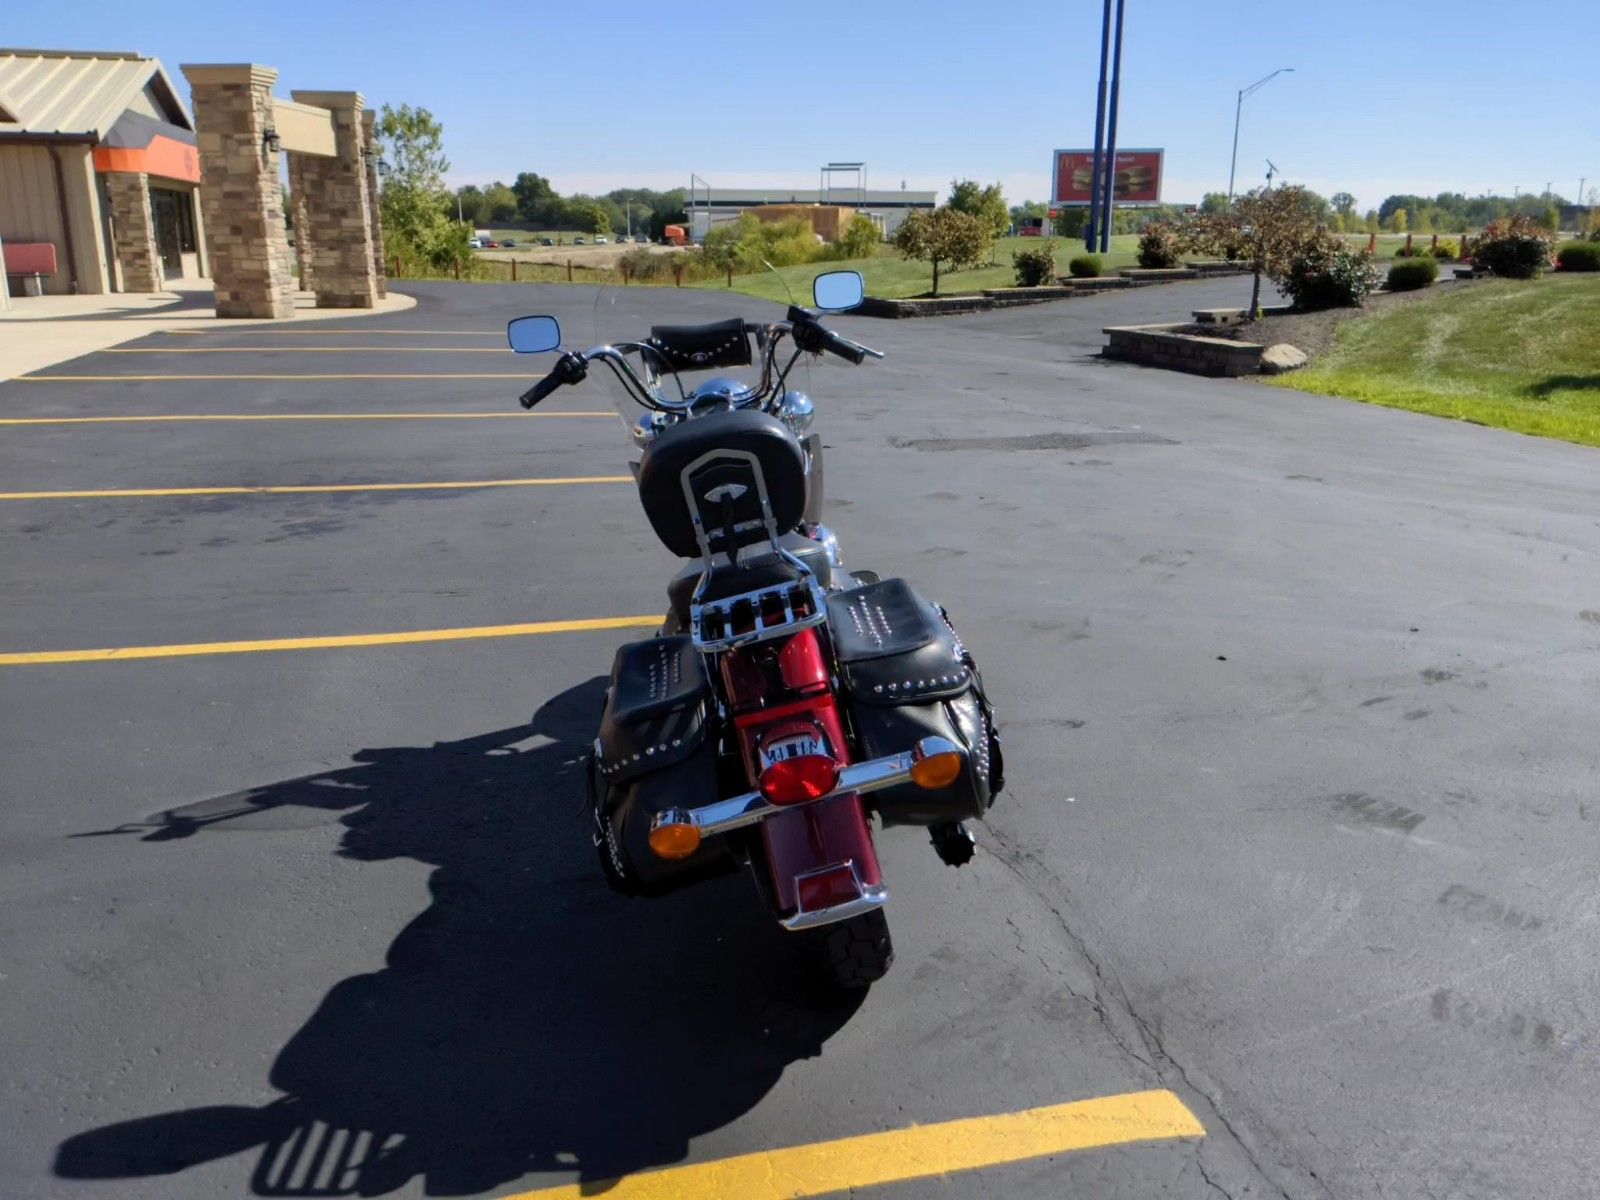 2014 Harley-Davidson Heritage Softail® Classic in Muncie, Indiana - Photo 4